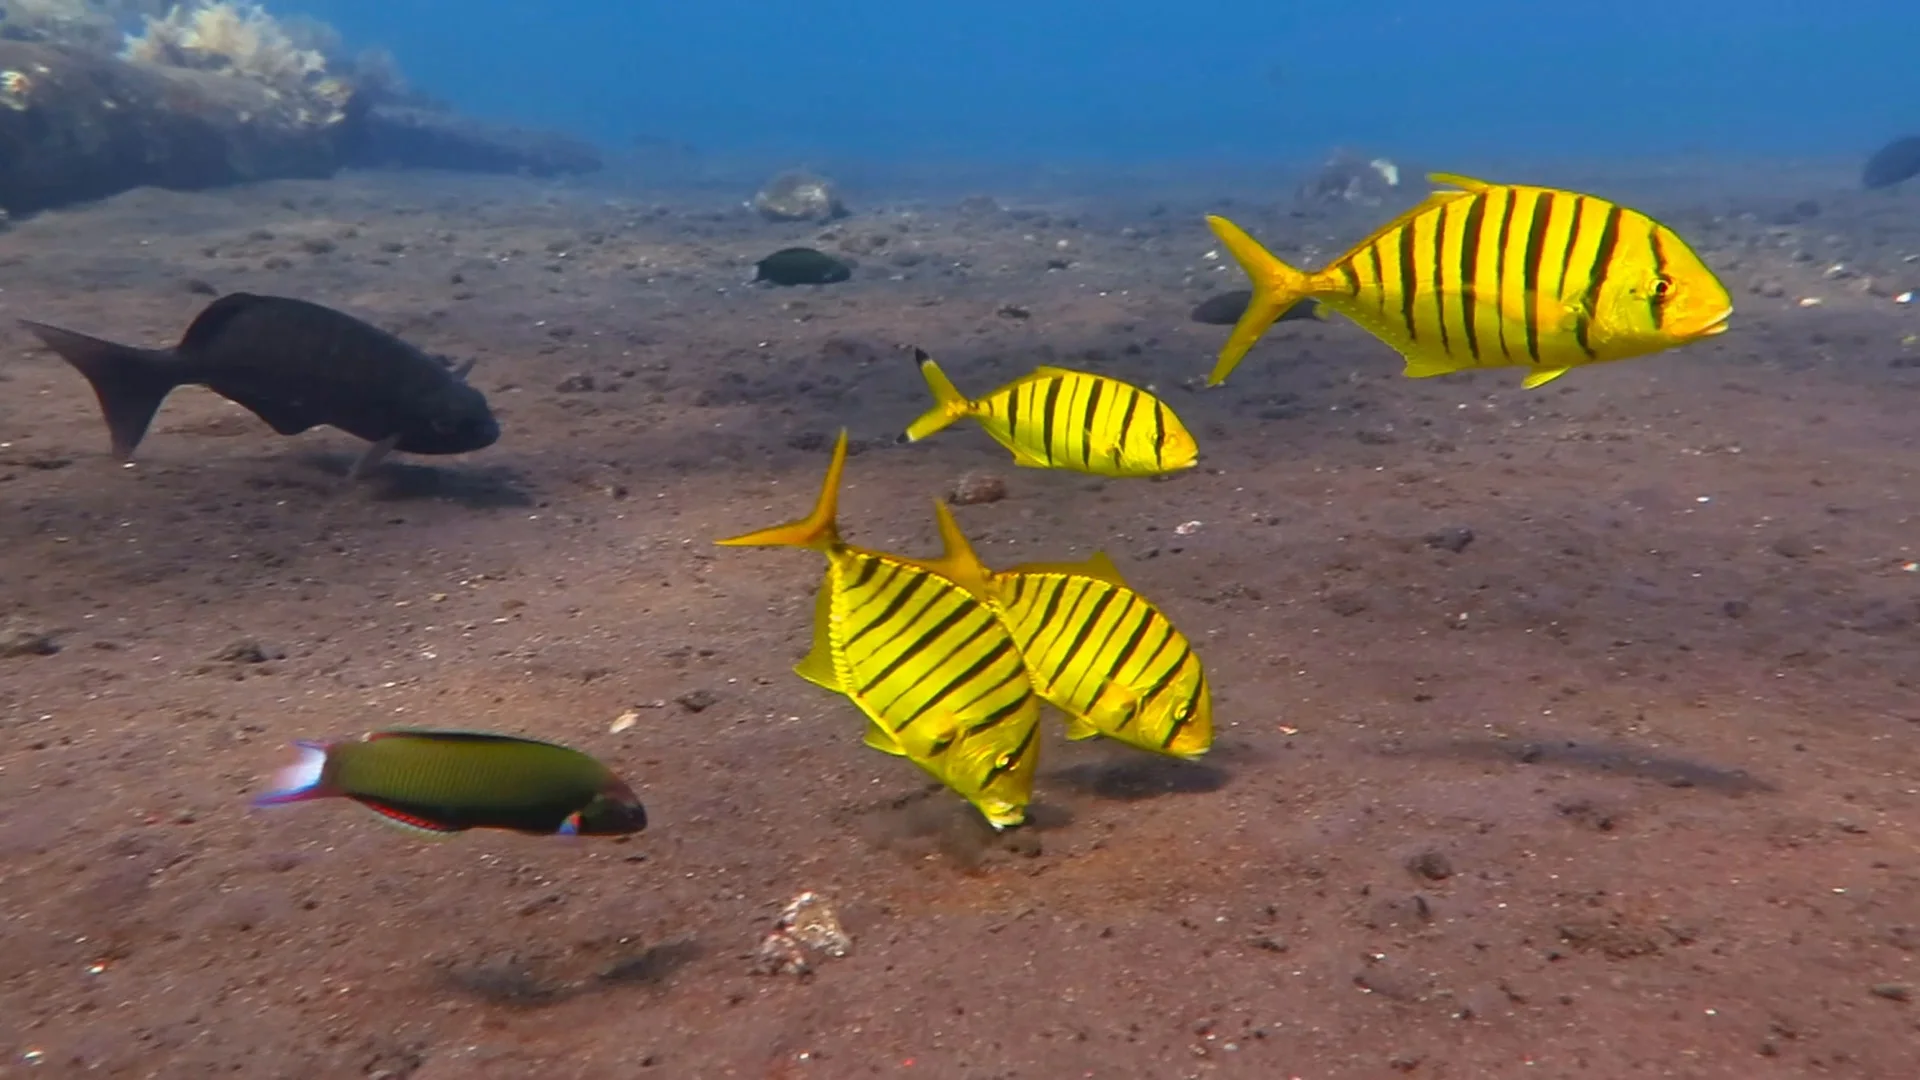 https://images.pond5.com/school-yellow-trevally-pilot-fish-footage-087253547_prevstill.jpeg